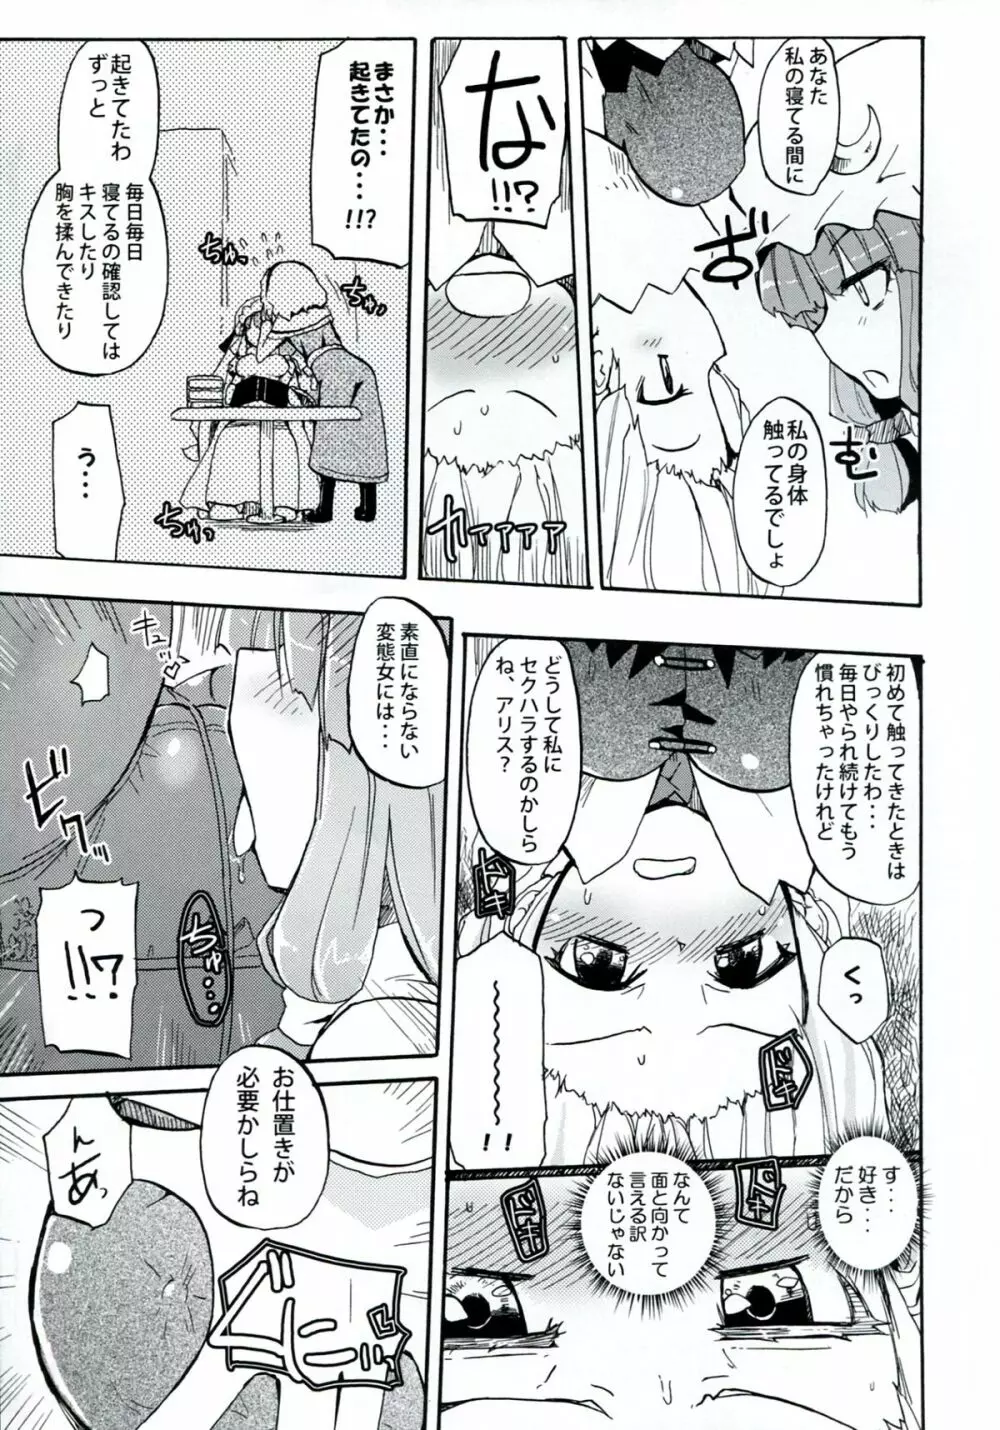 Homuraya Milk ★ Collection 2 - page13